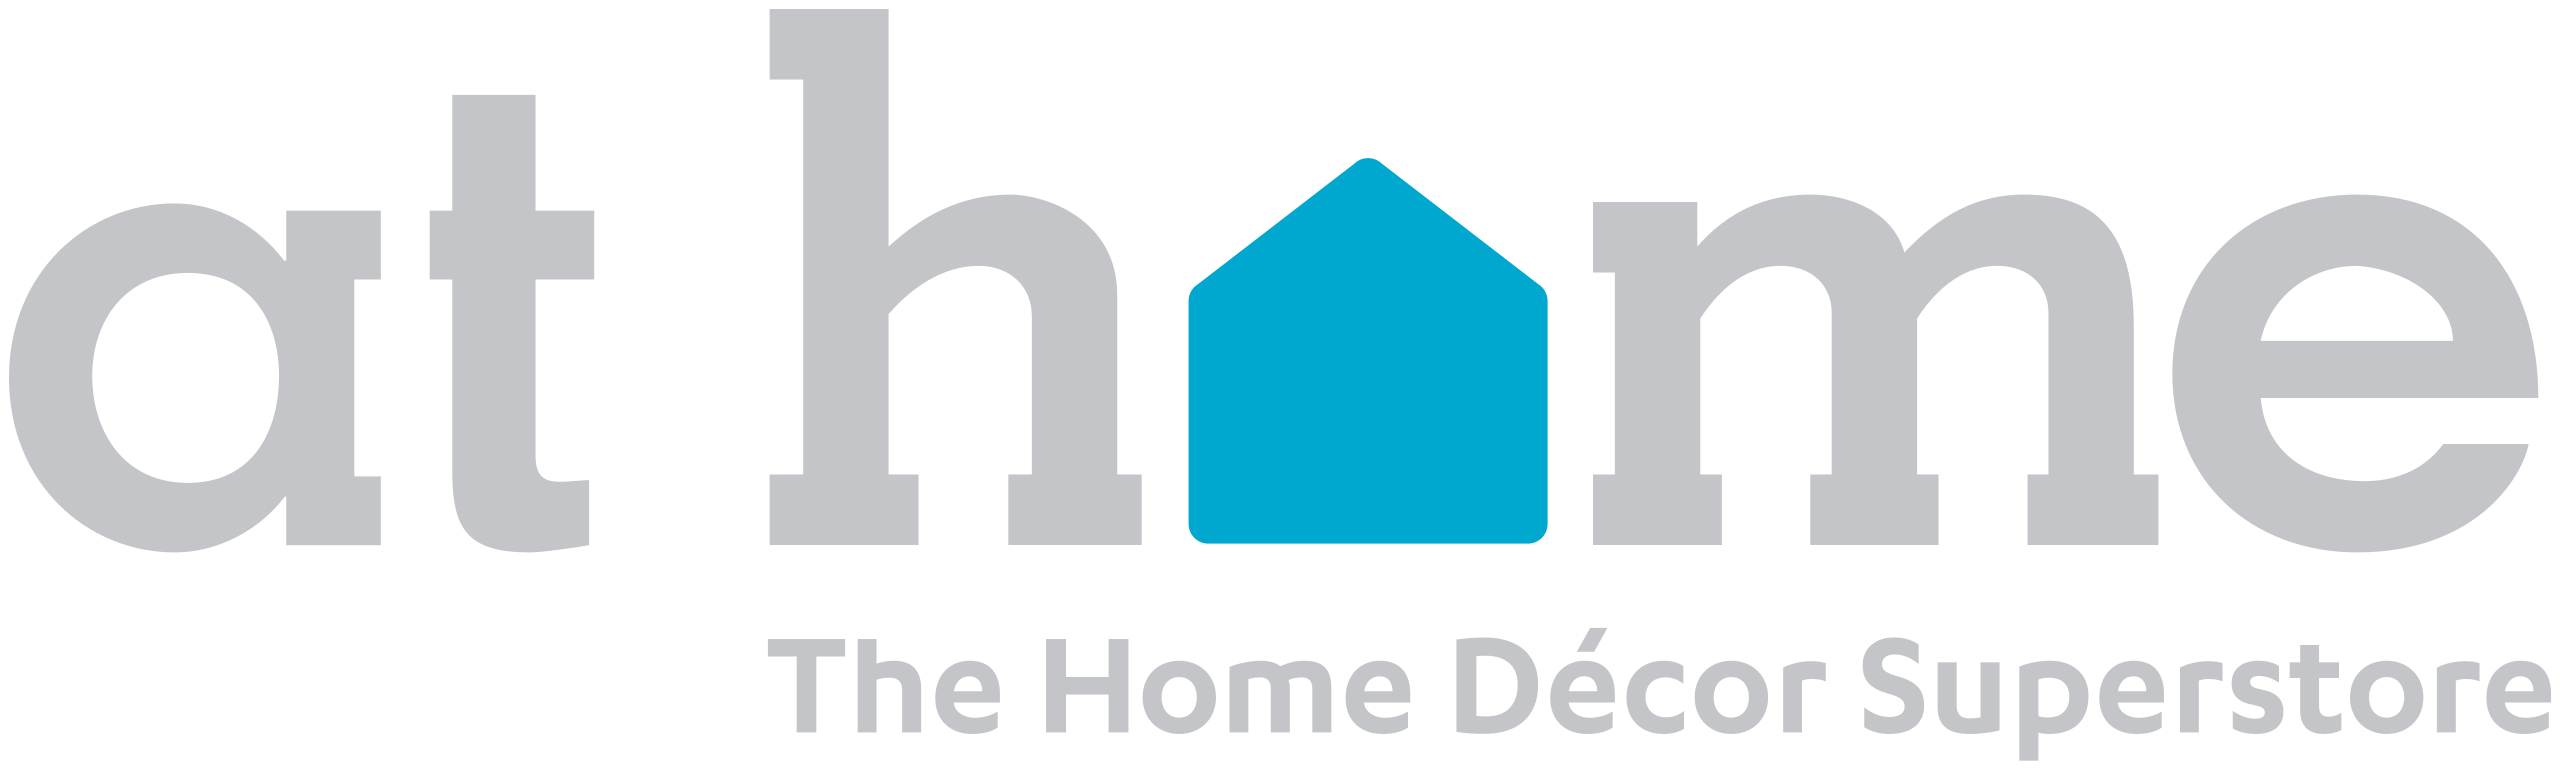 File:At Home logo.svg - Wikipedia